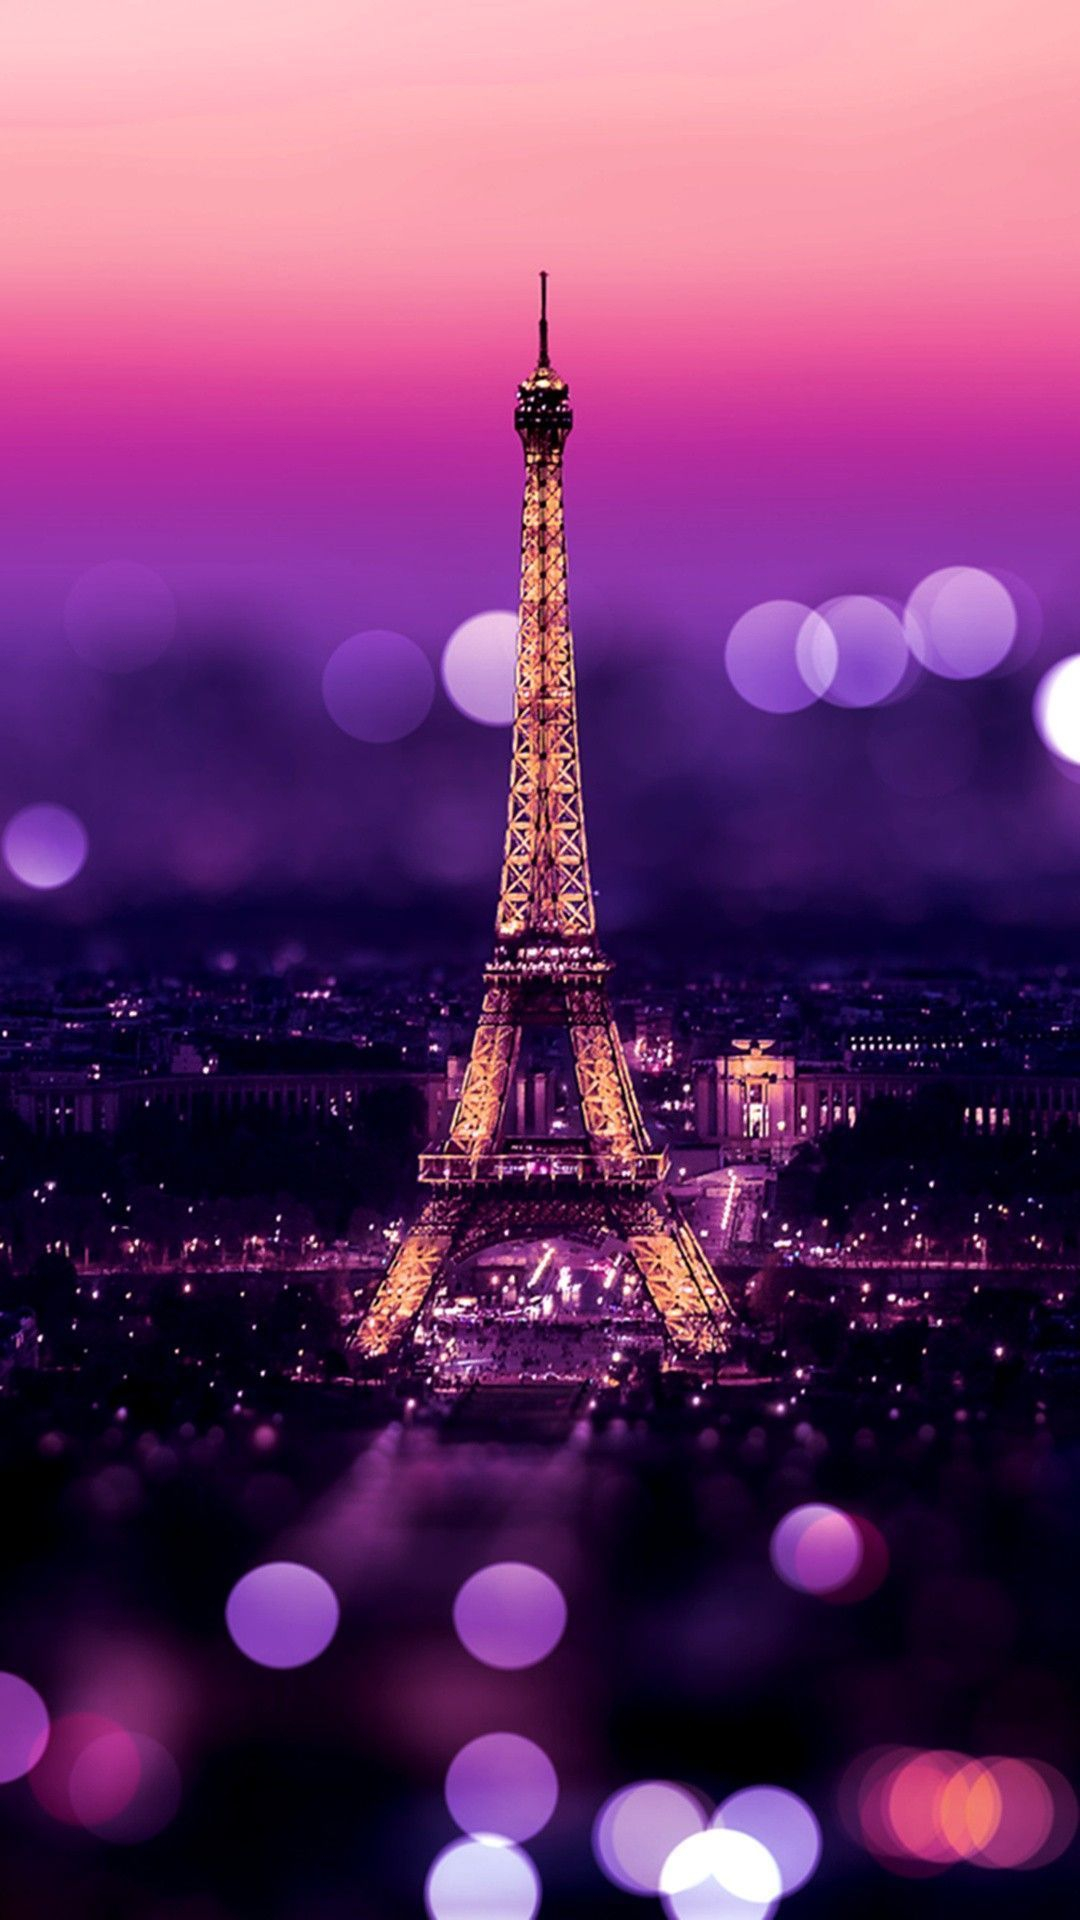 1080x1920 55+ Pink Eiffel Tower Paris France Wallpapers Download at WallpaperBro | Paris wallpaper iphone, Paris wallpaper, France wallpaper